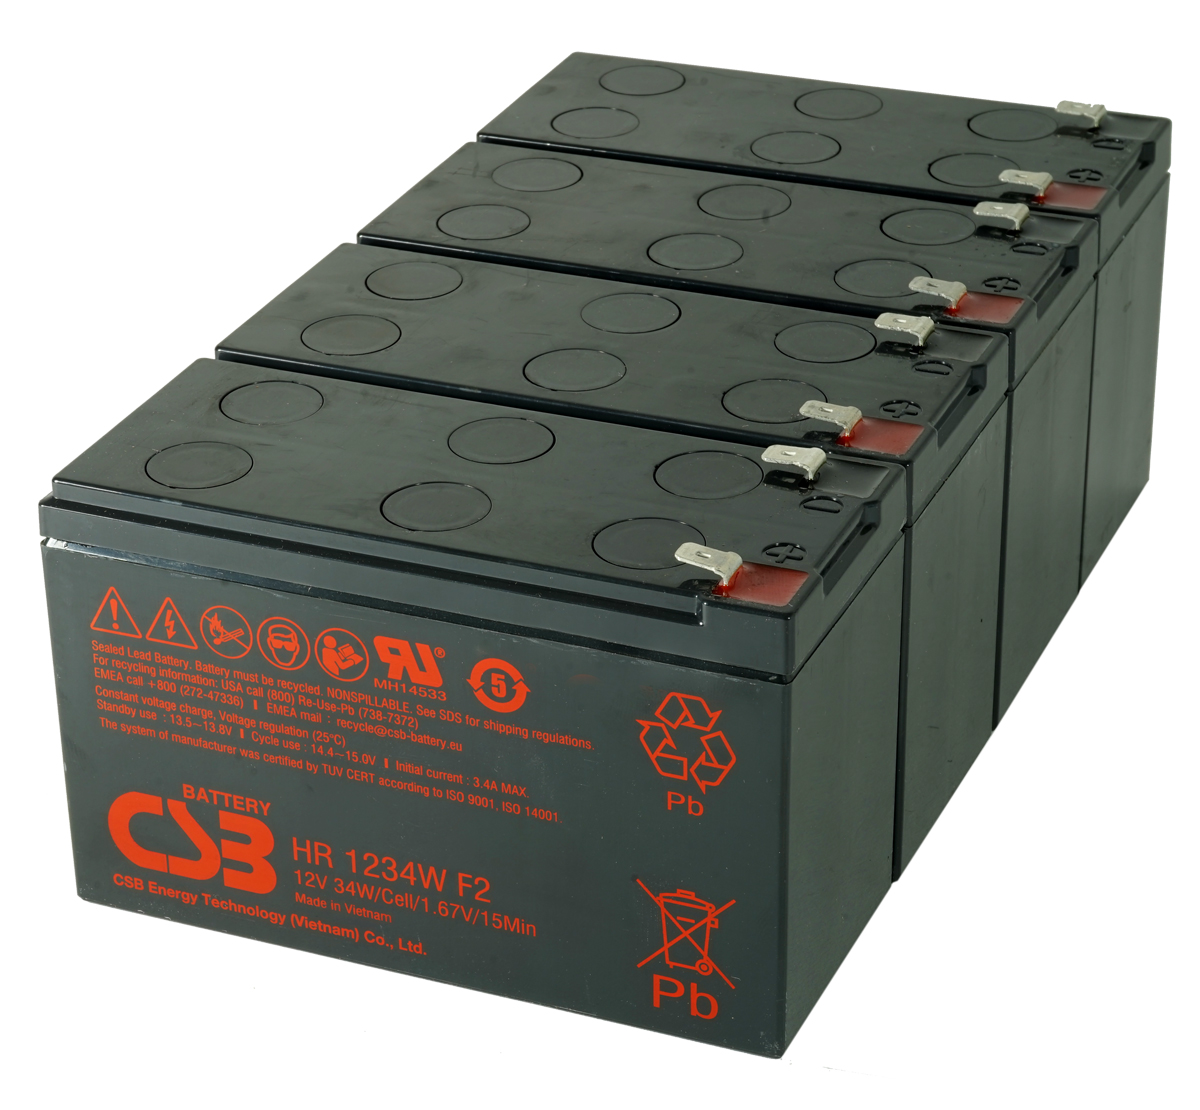 CSB HR1234WF2 Lead Acid Battery - Pack of 4